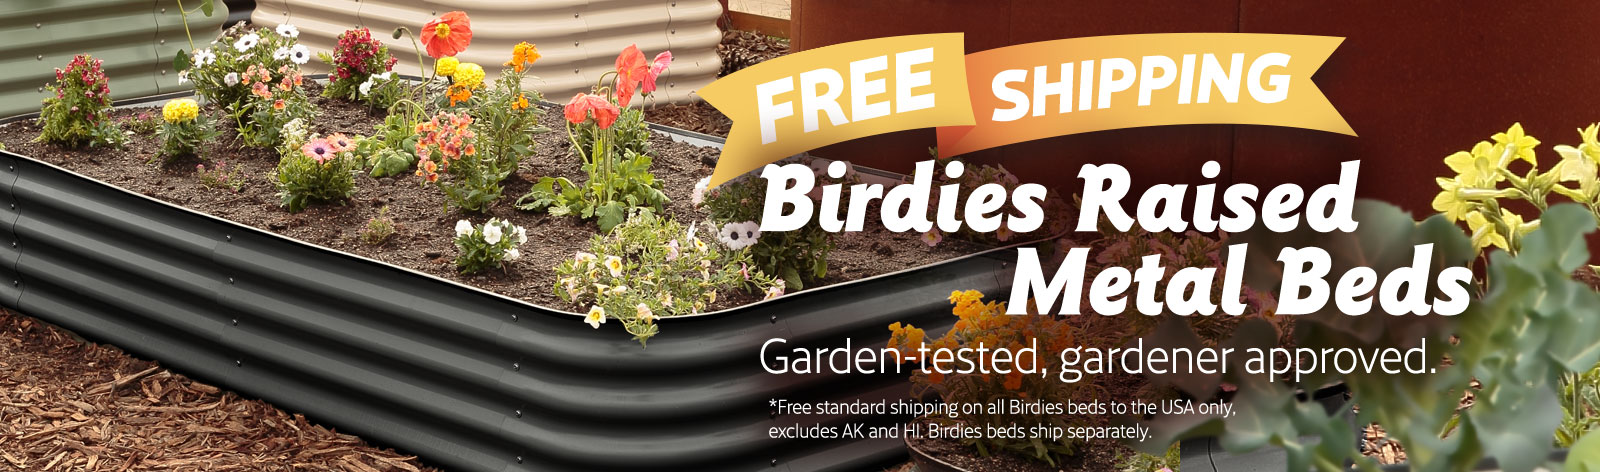 Birdies raised beds free shipping.